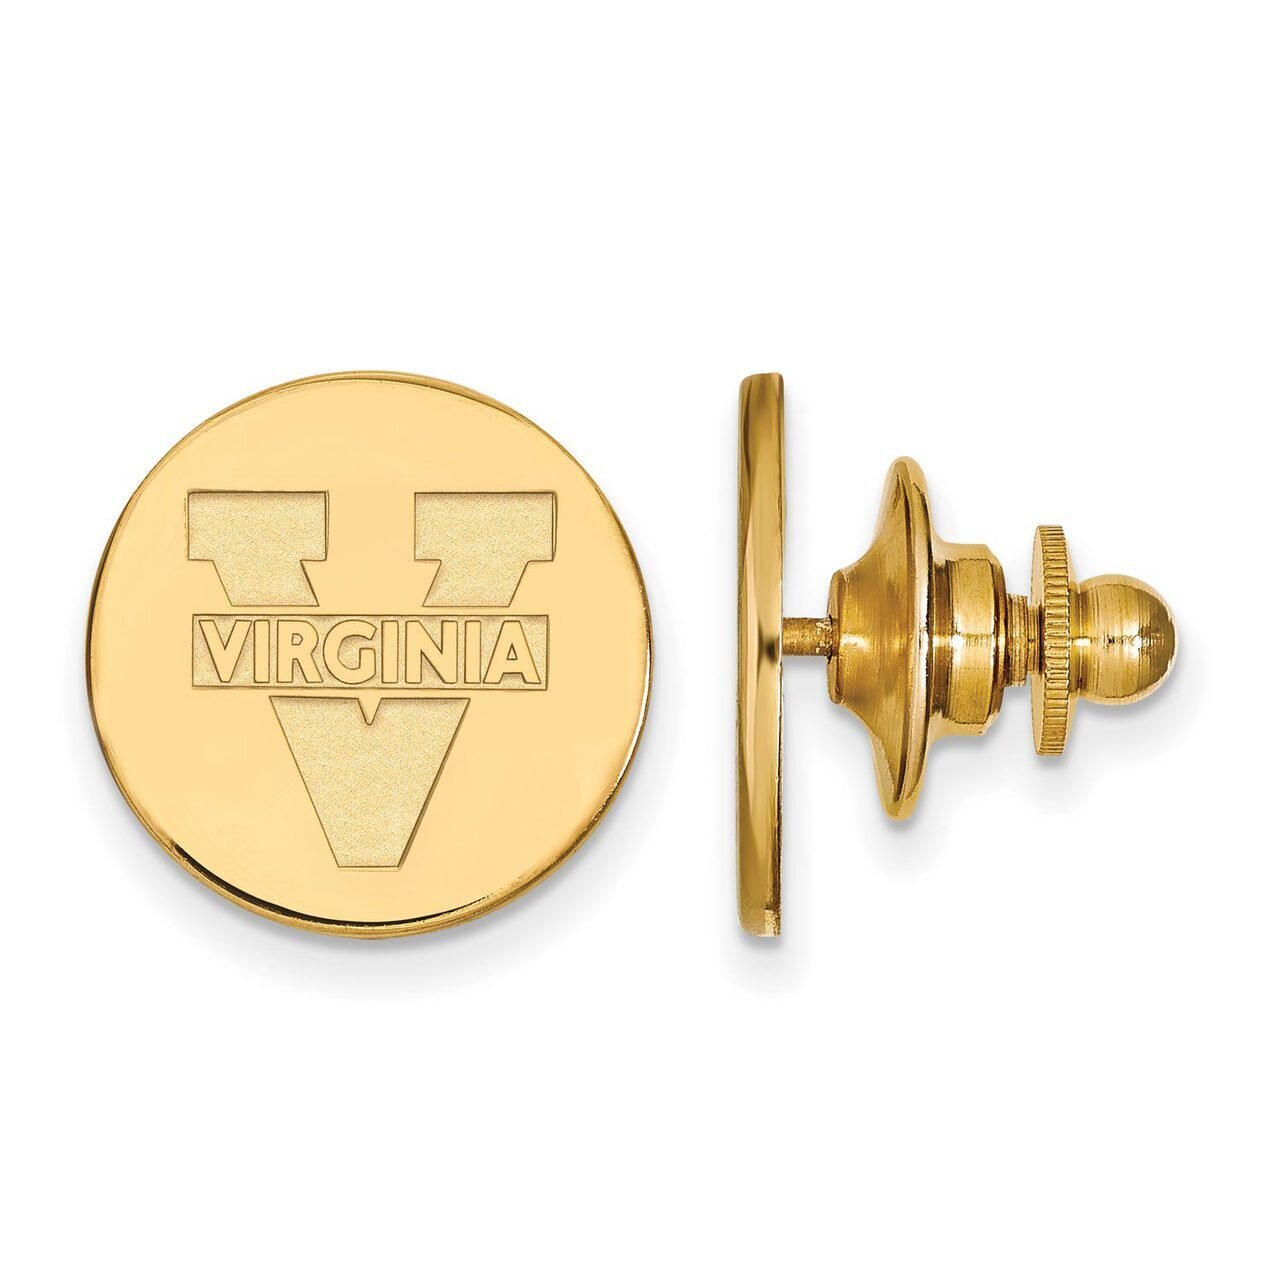 University of Virginia Lapel Pin Gold-plated Silver GP011UVA